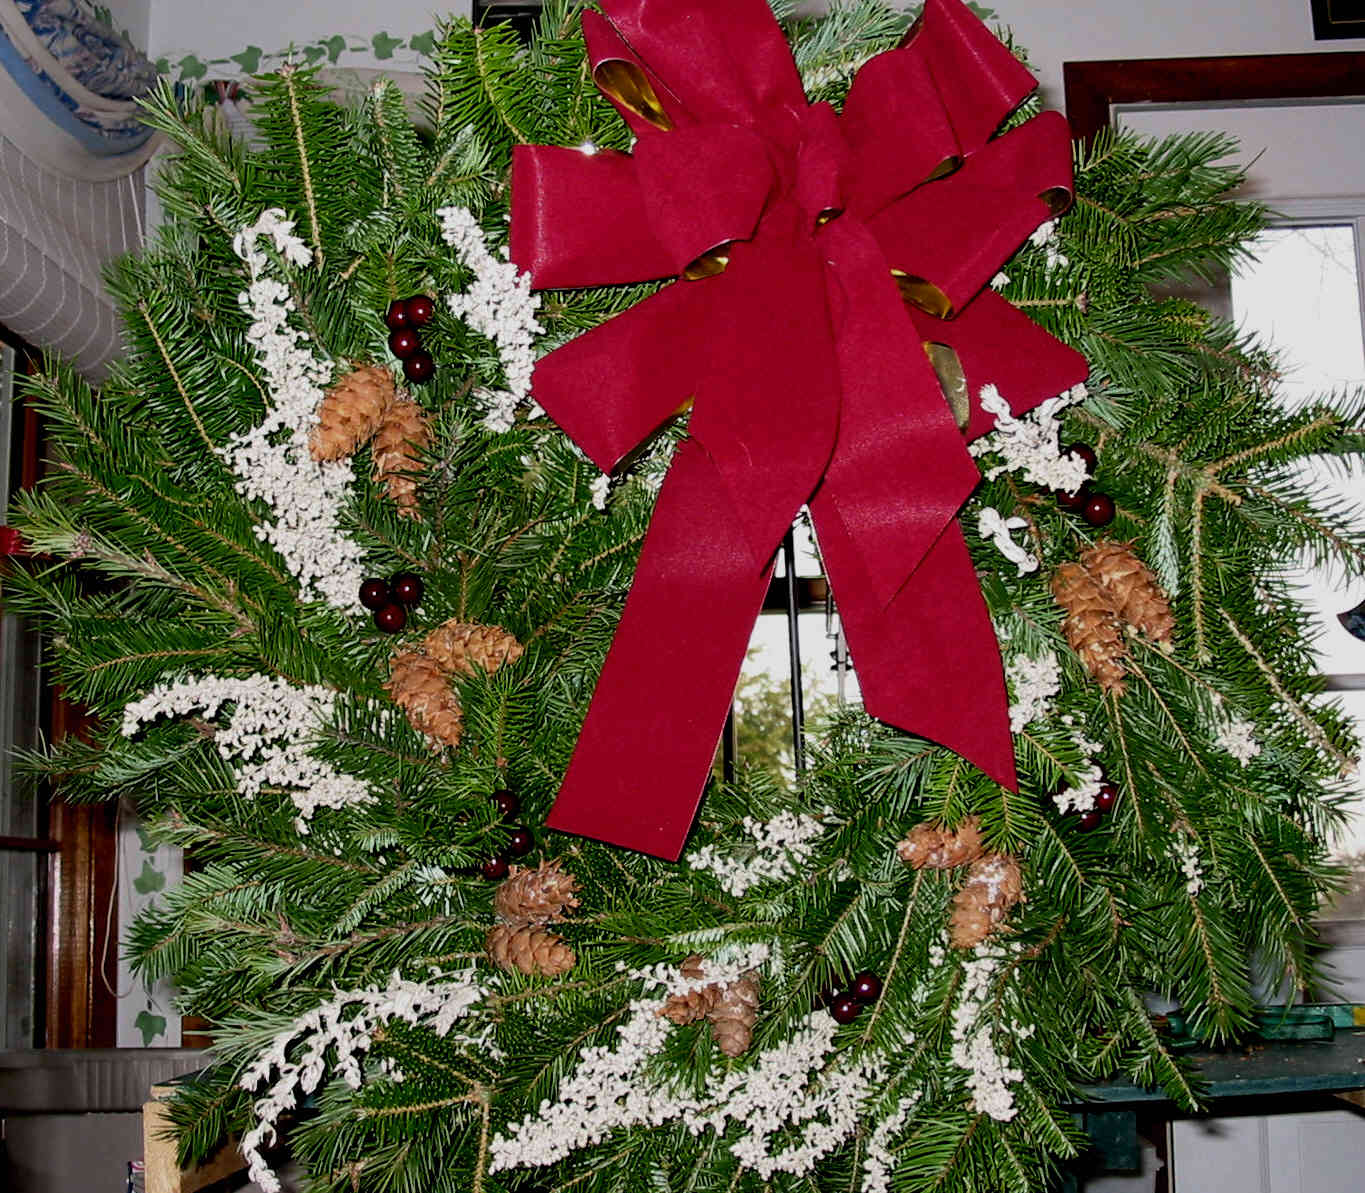 Evergreen Christmas wreath